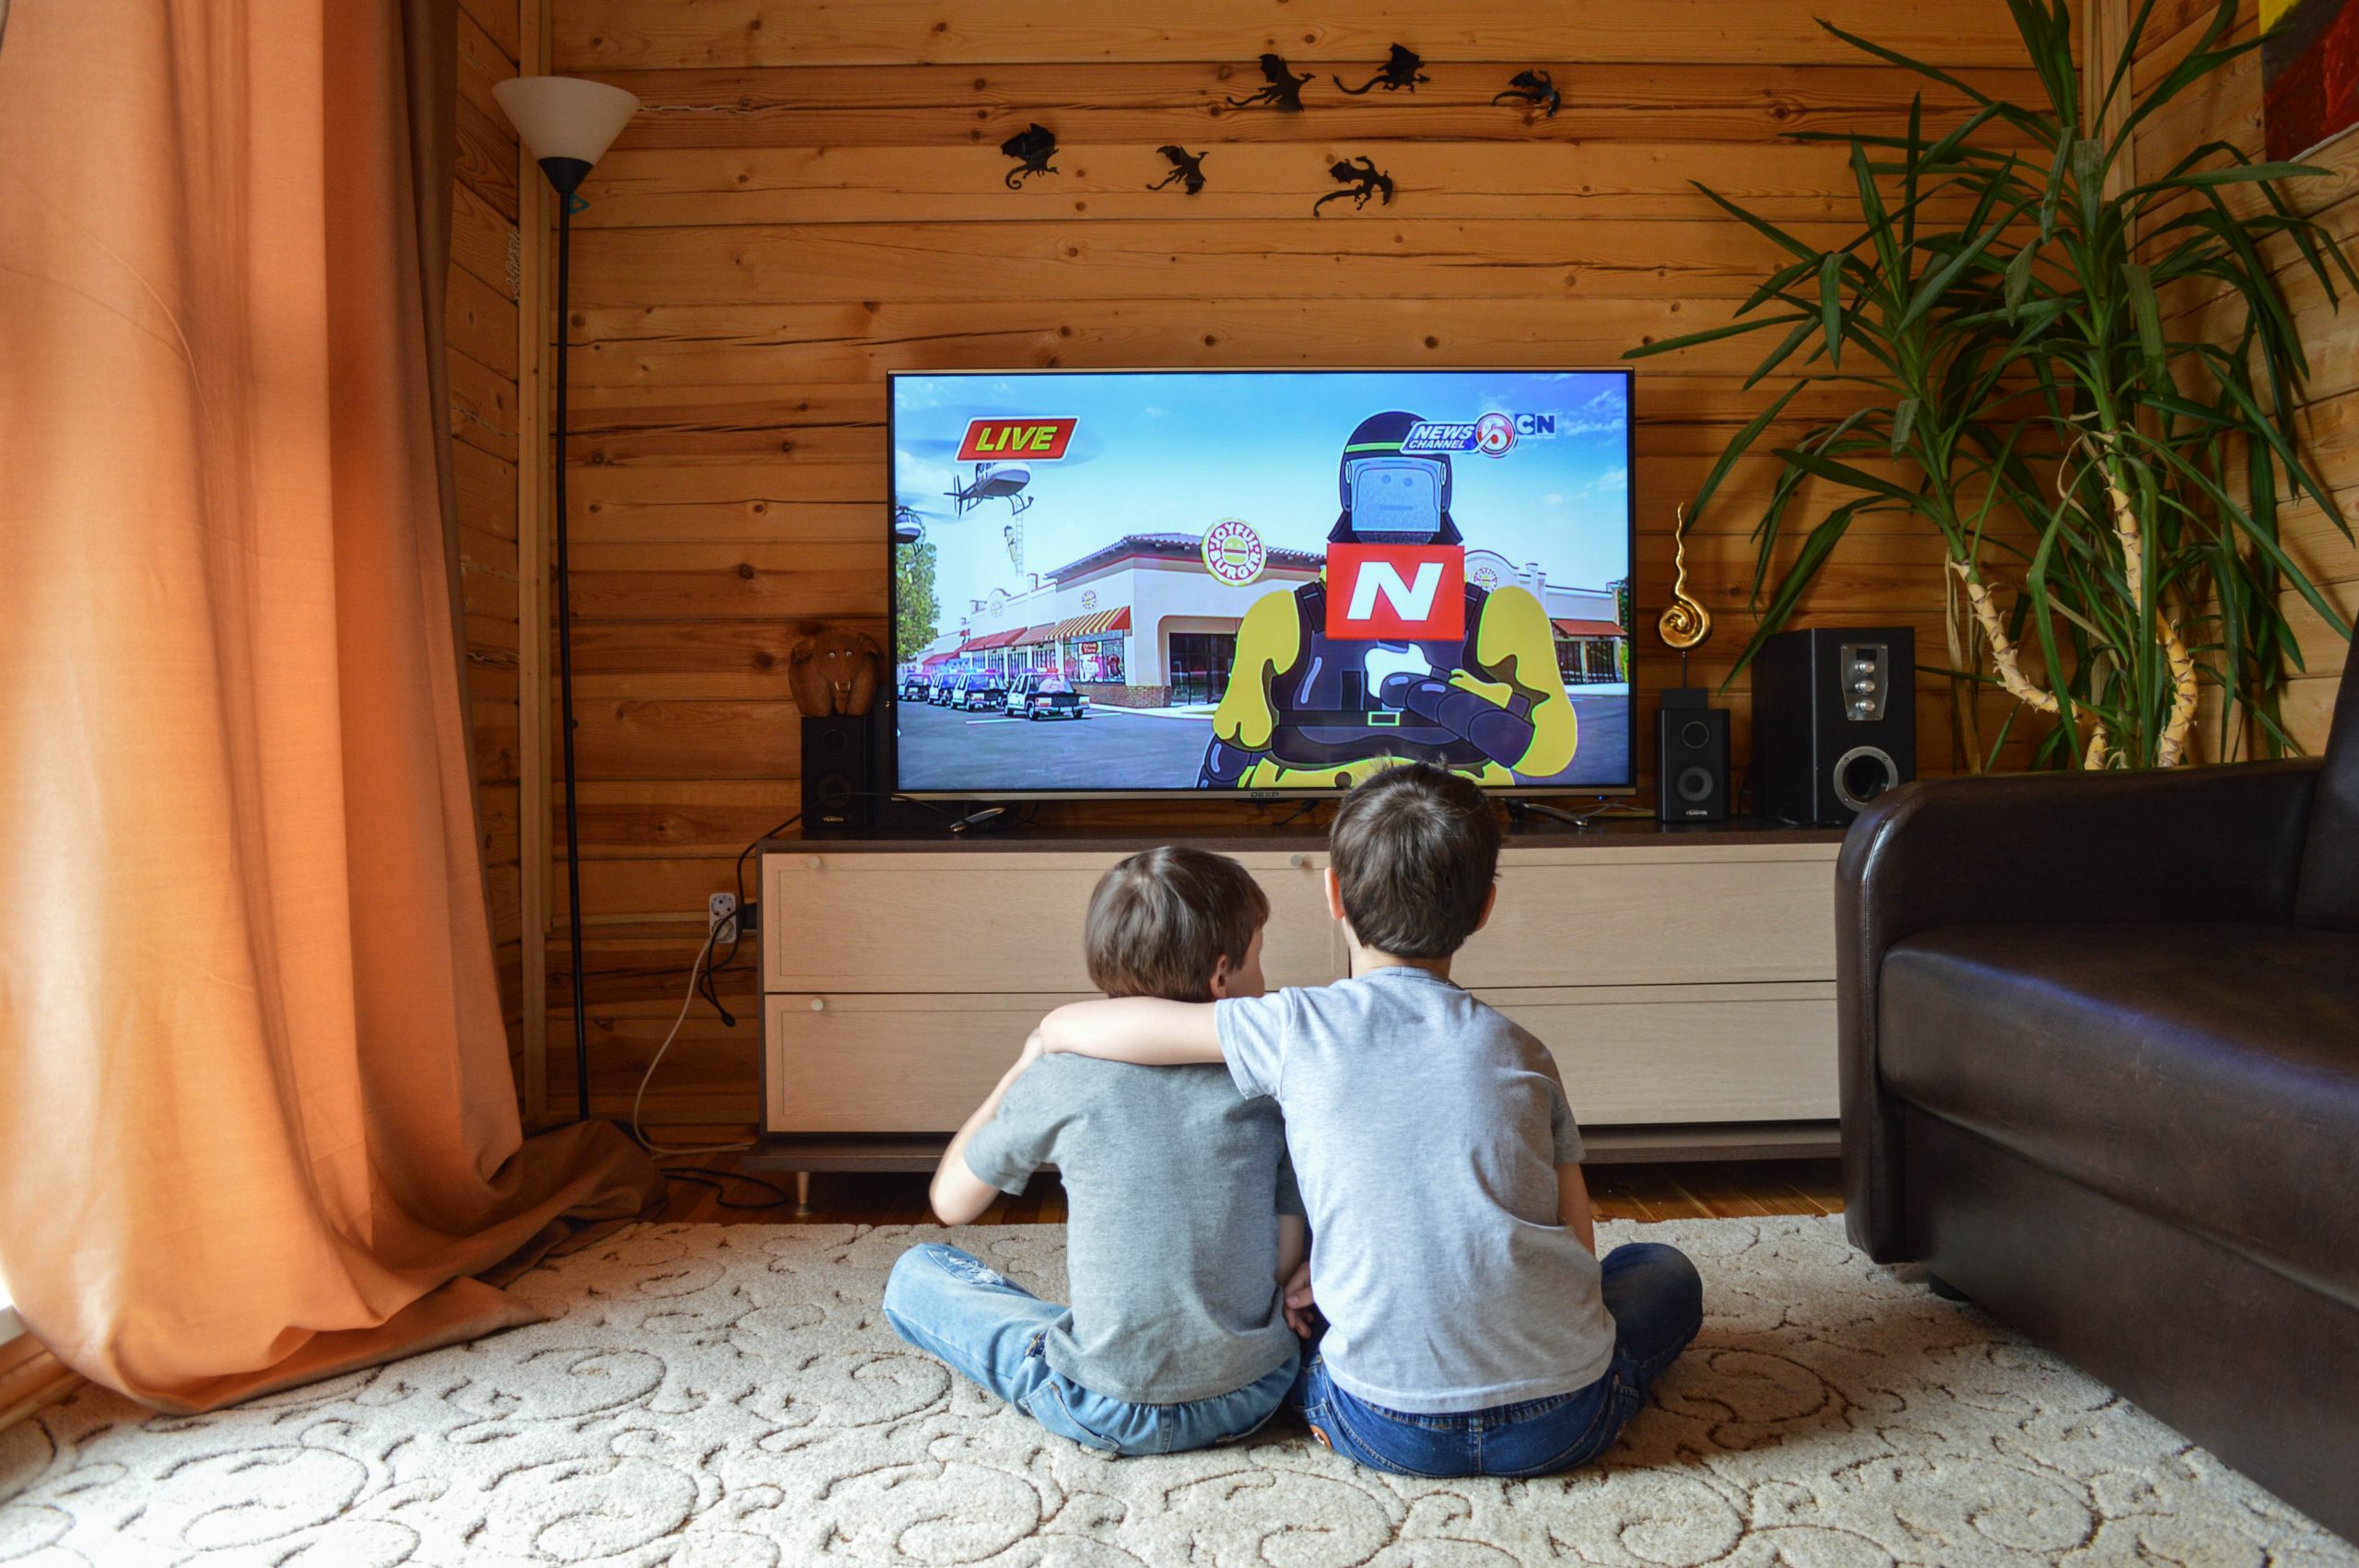 Россия просмотр просмотр телевизора. Телевизор для детей. Телевизор на даче. Дети смотрят телевизор. Ребенок за телевизором.